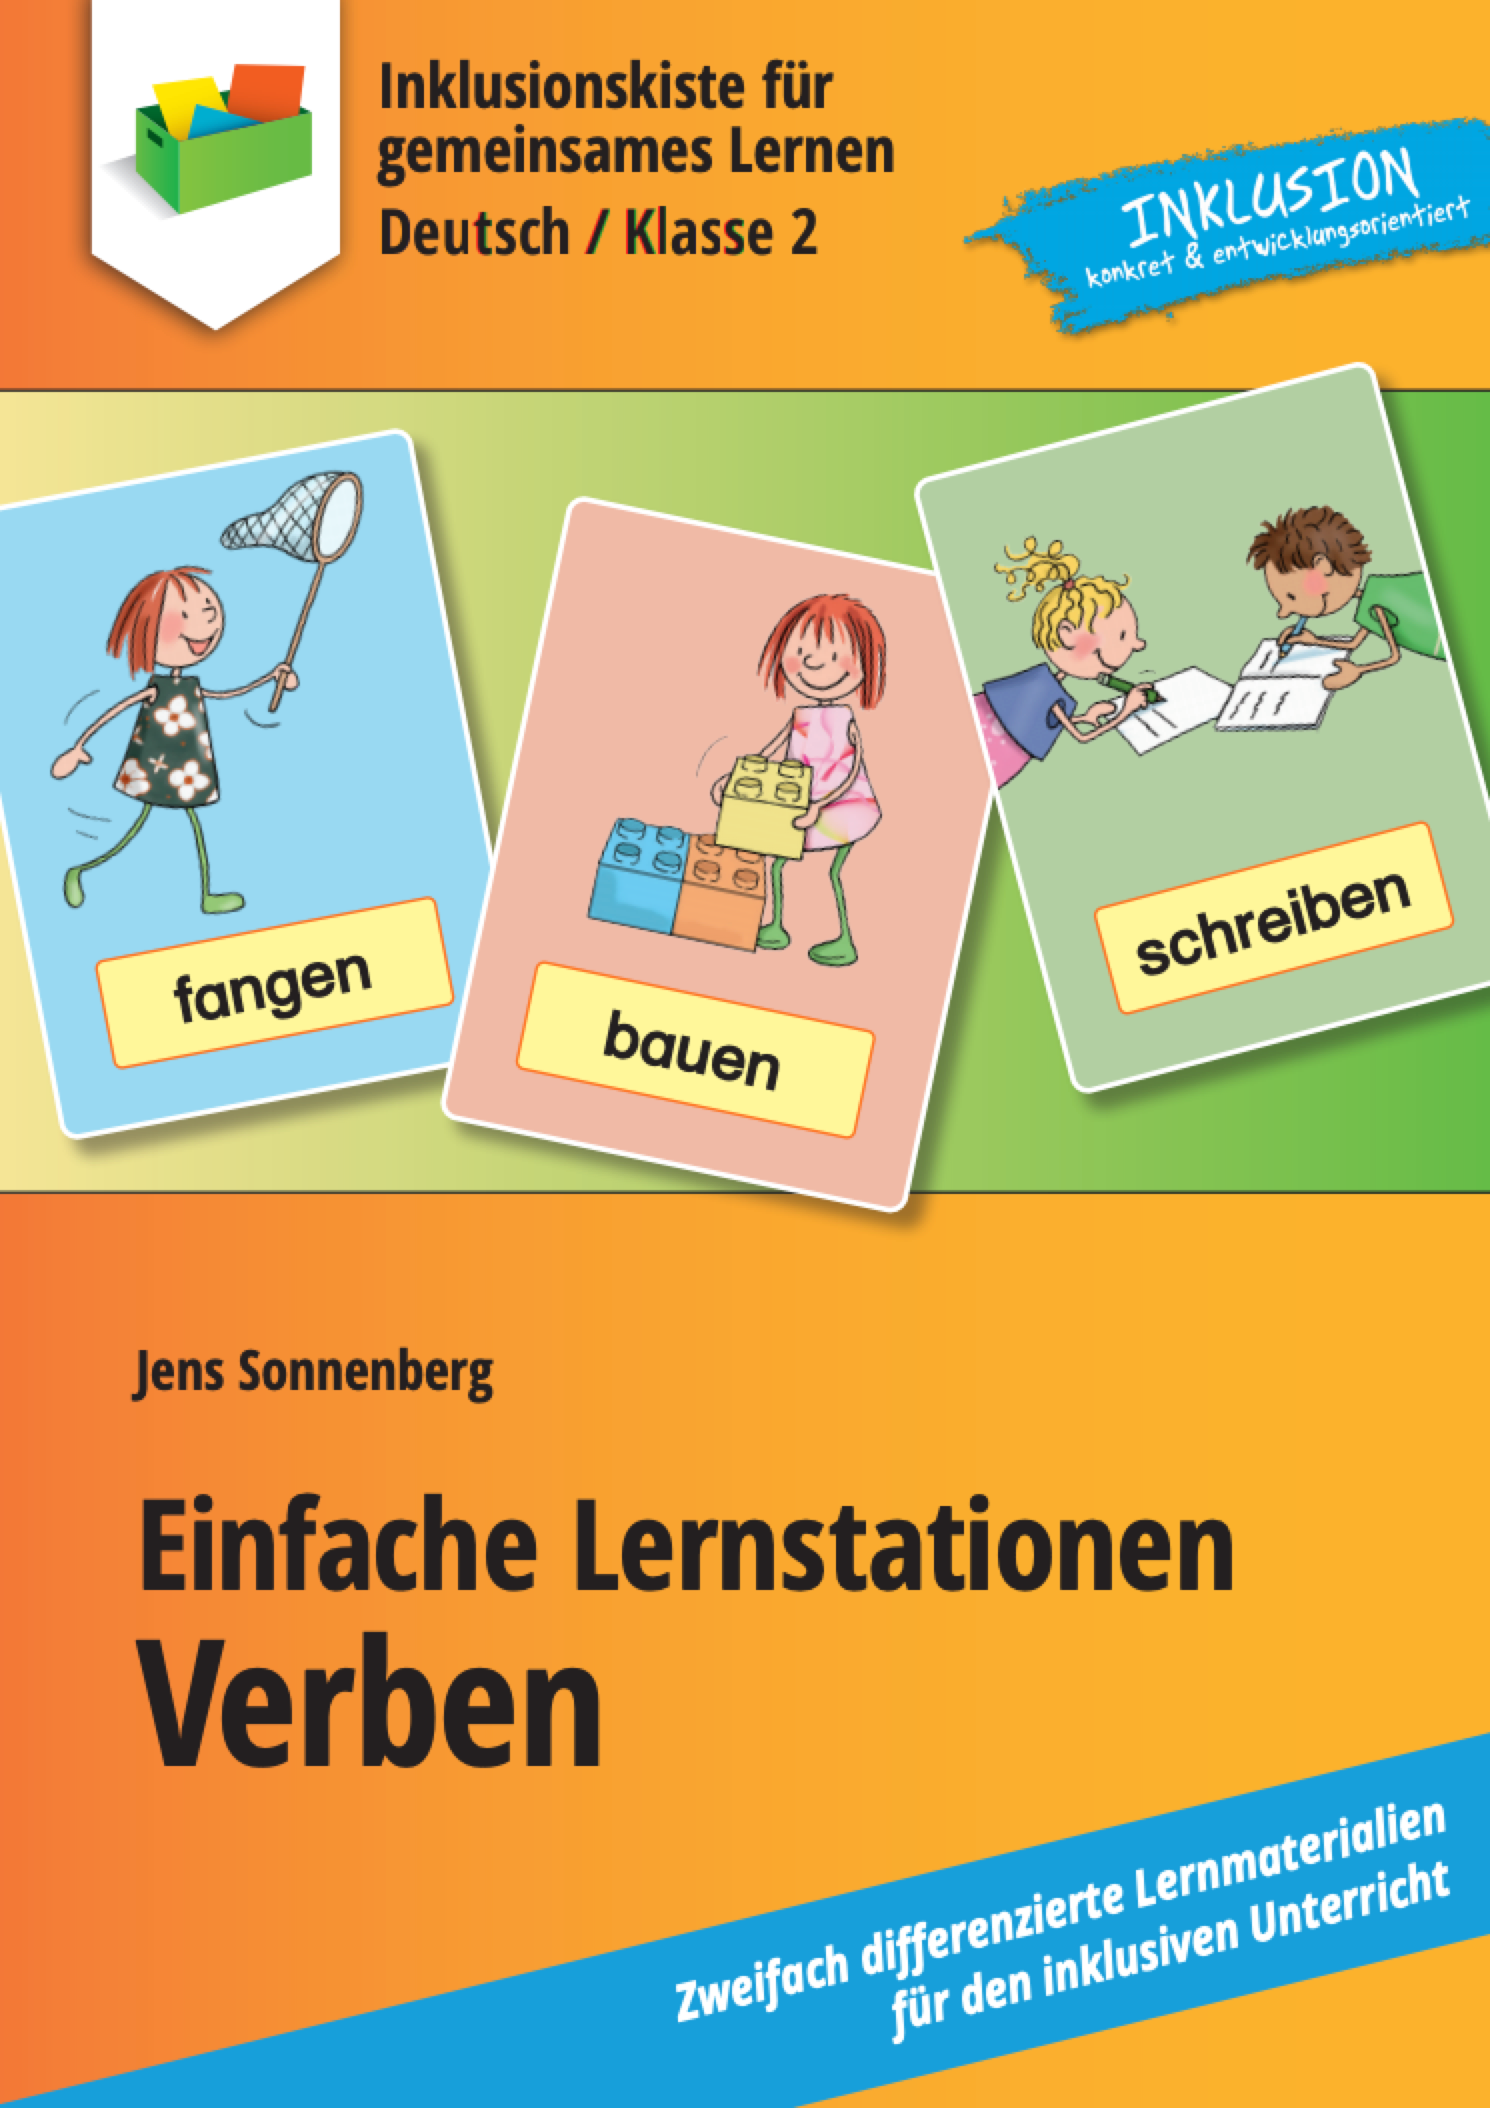 Cover des E-Books `Èinfache Lernstationen Verben`mit Grafiken